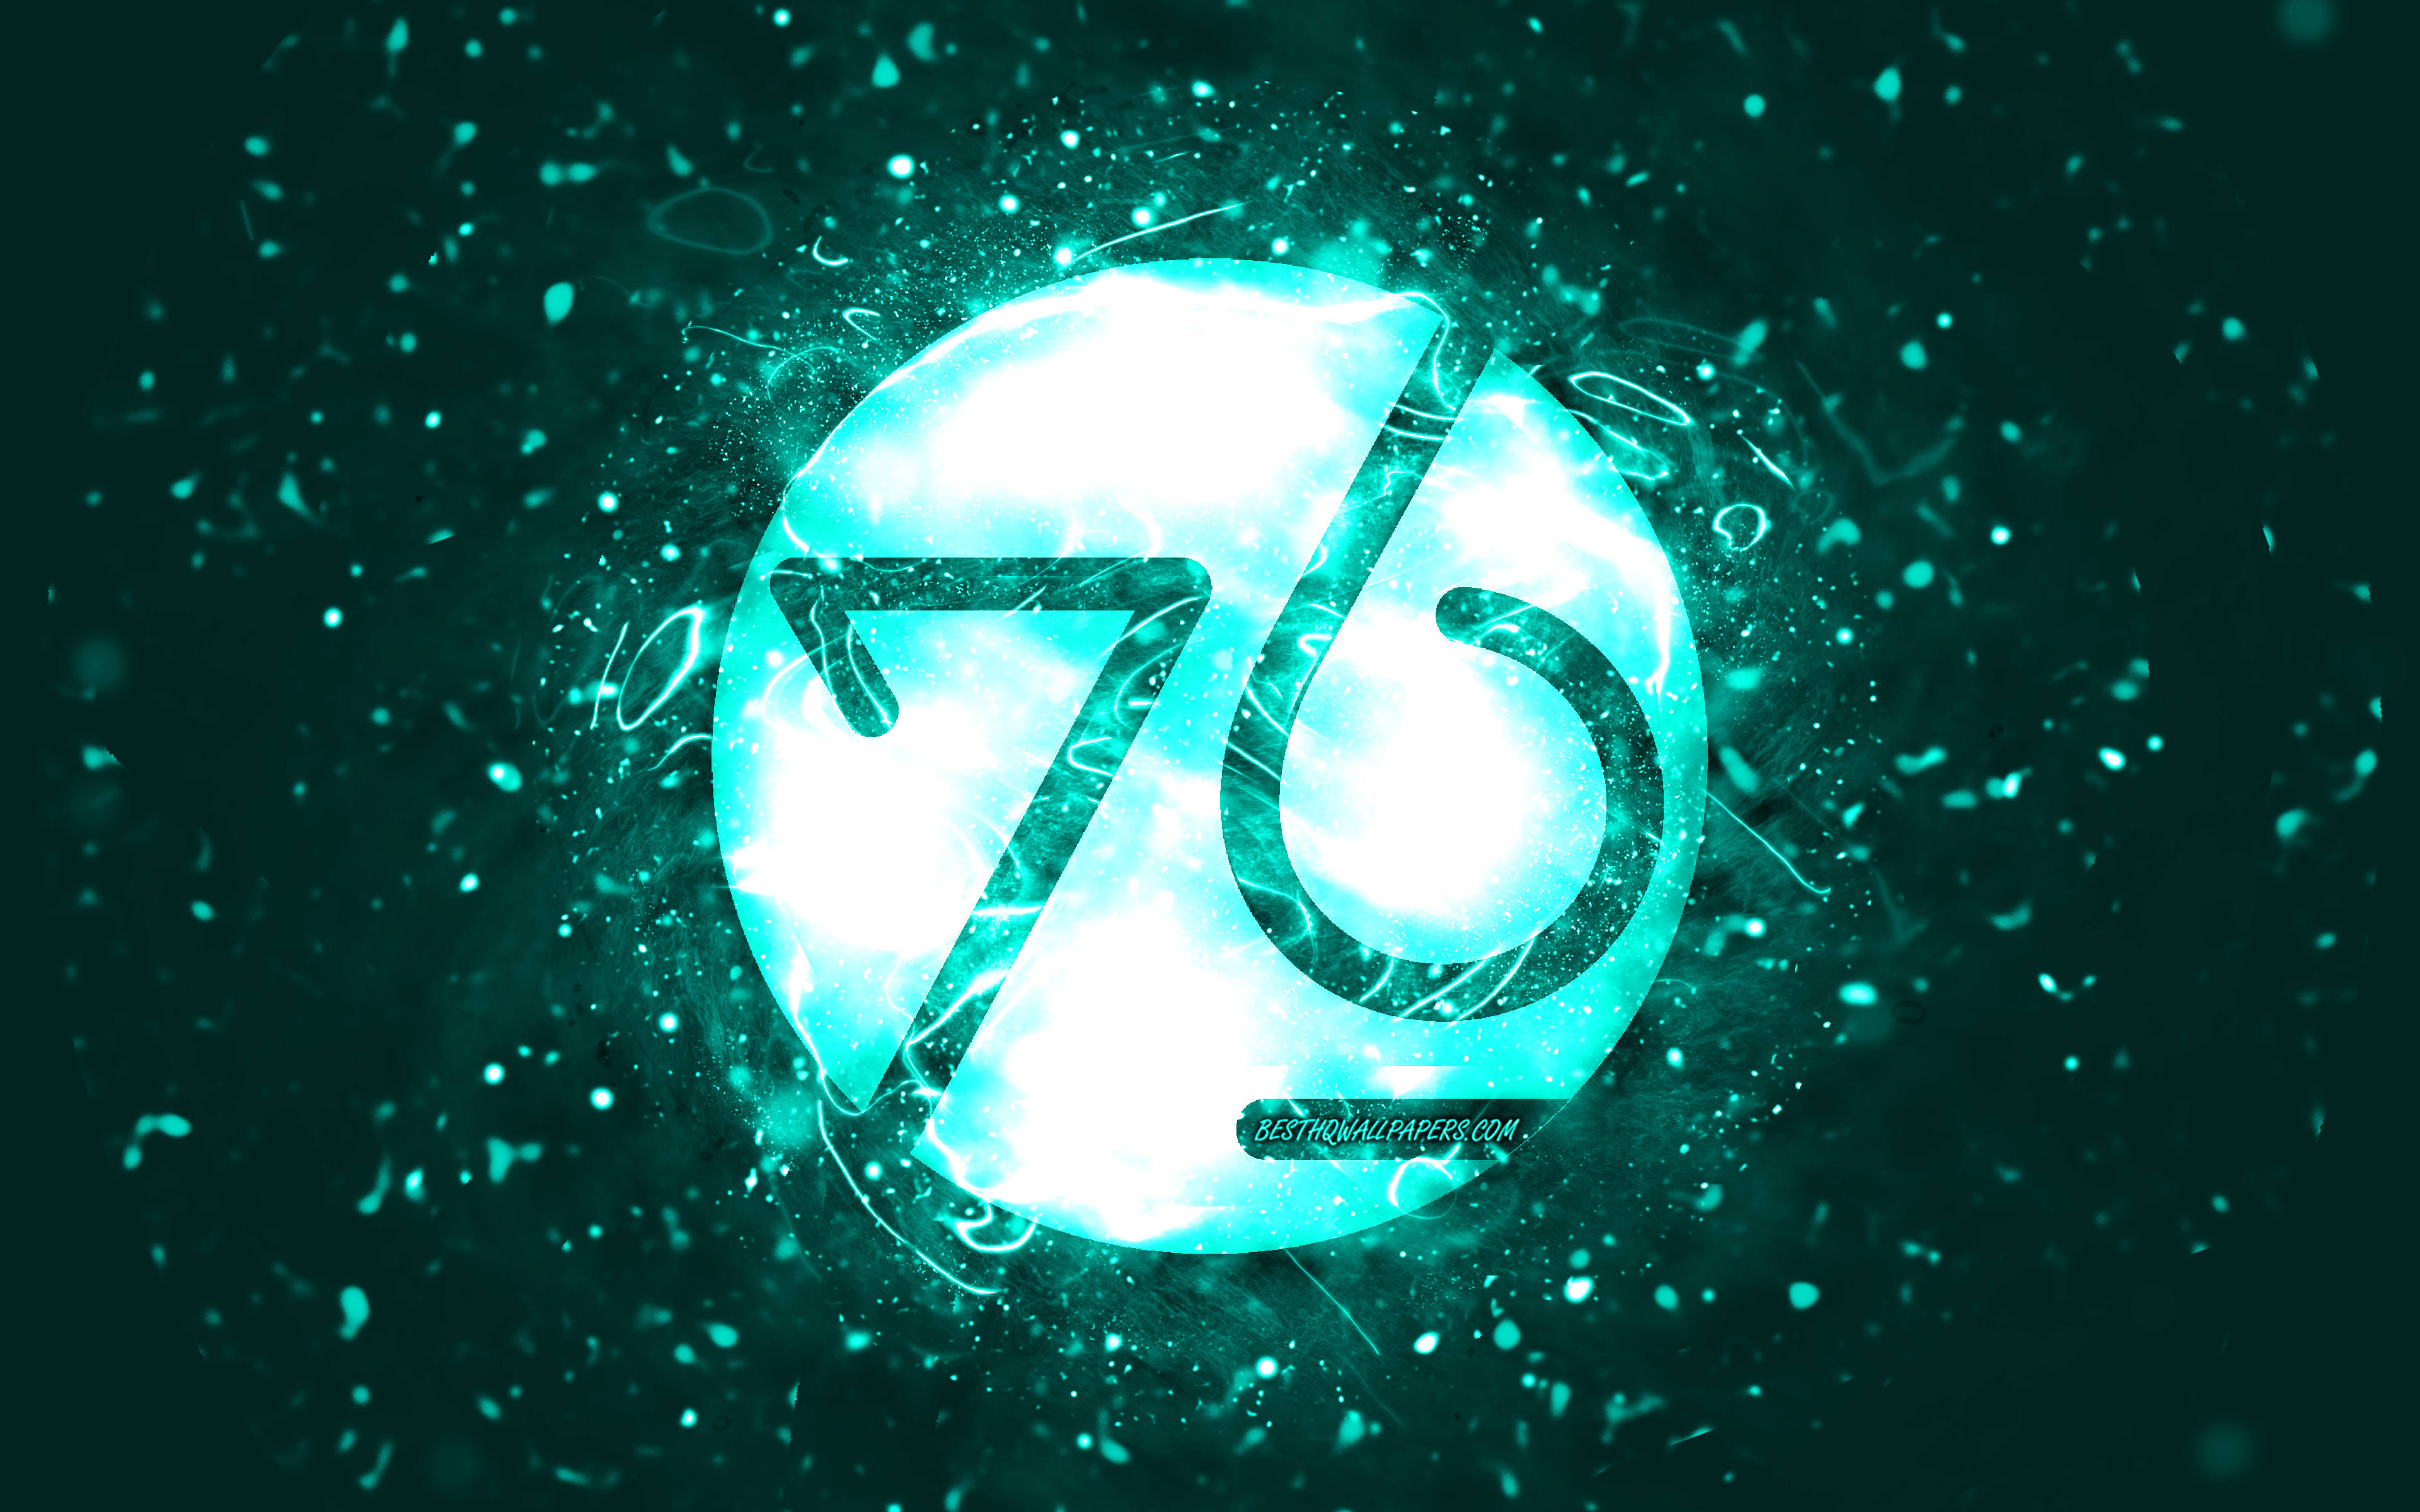 logo turquoise system76, 4k, néons turquoise, Linux, créatif, fond abstrait turquoise, logo system76, système d'exploitation, system76